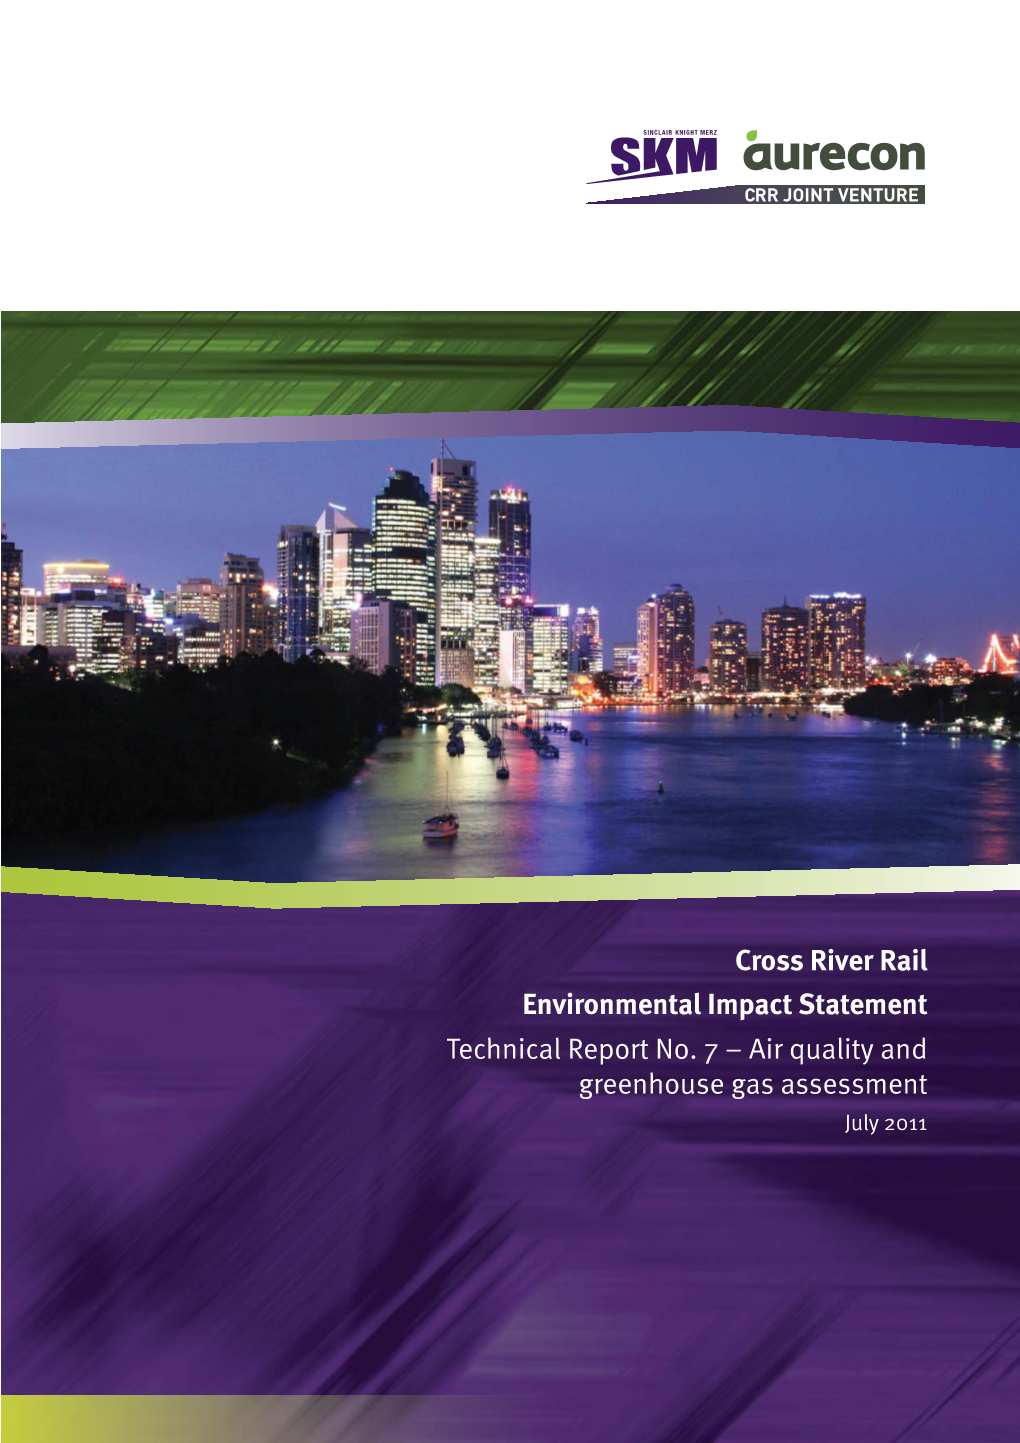 Cross River Rail Environmental Impact Statement Technical Report